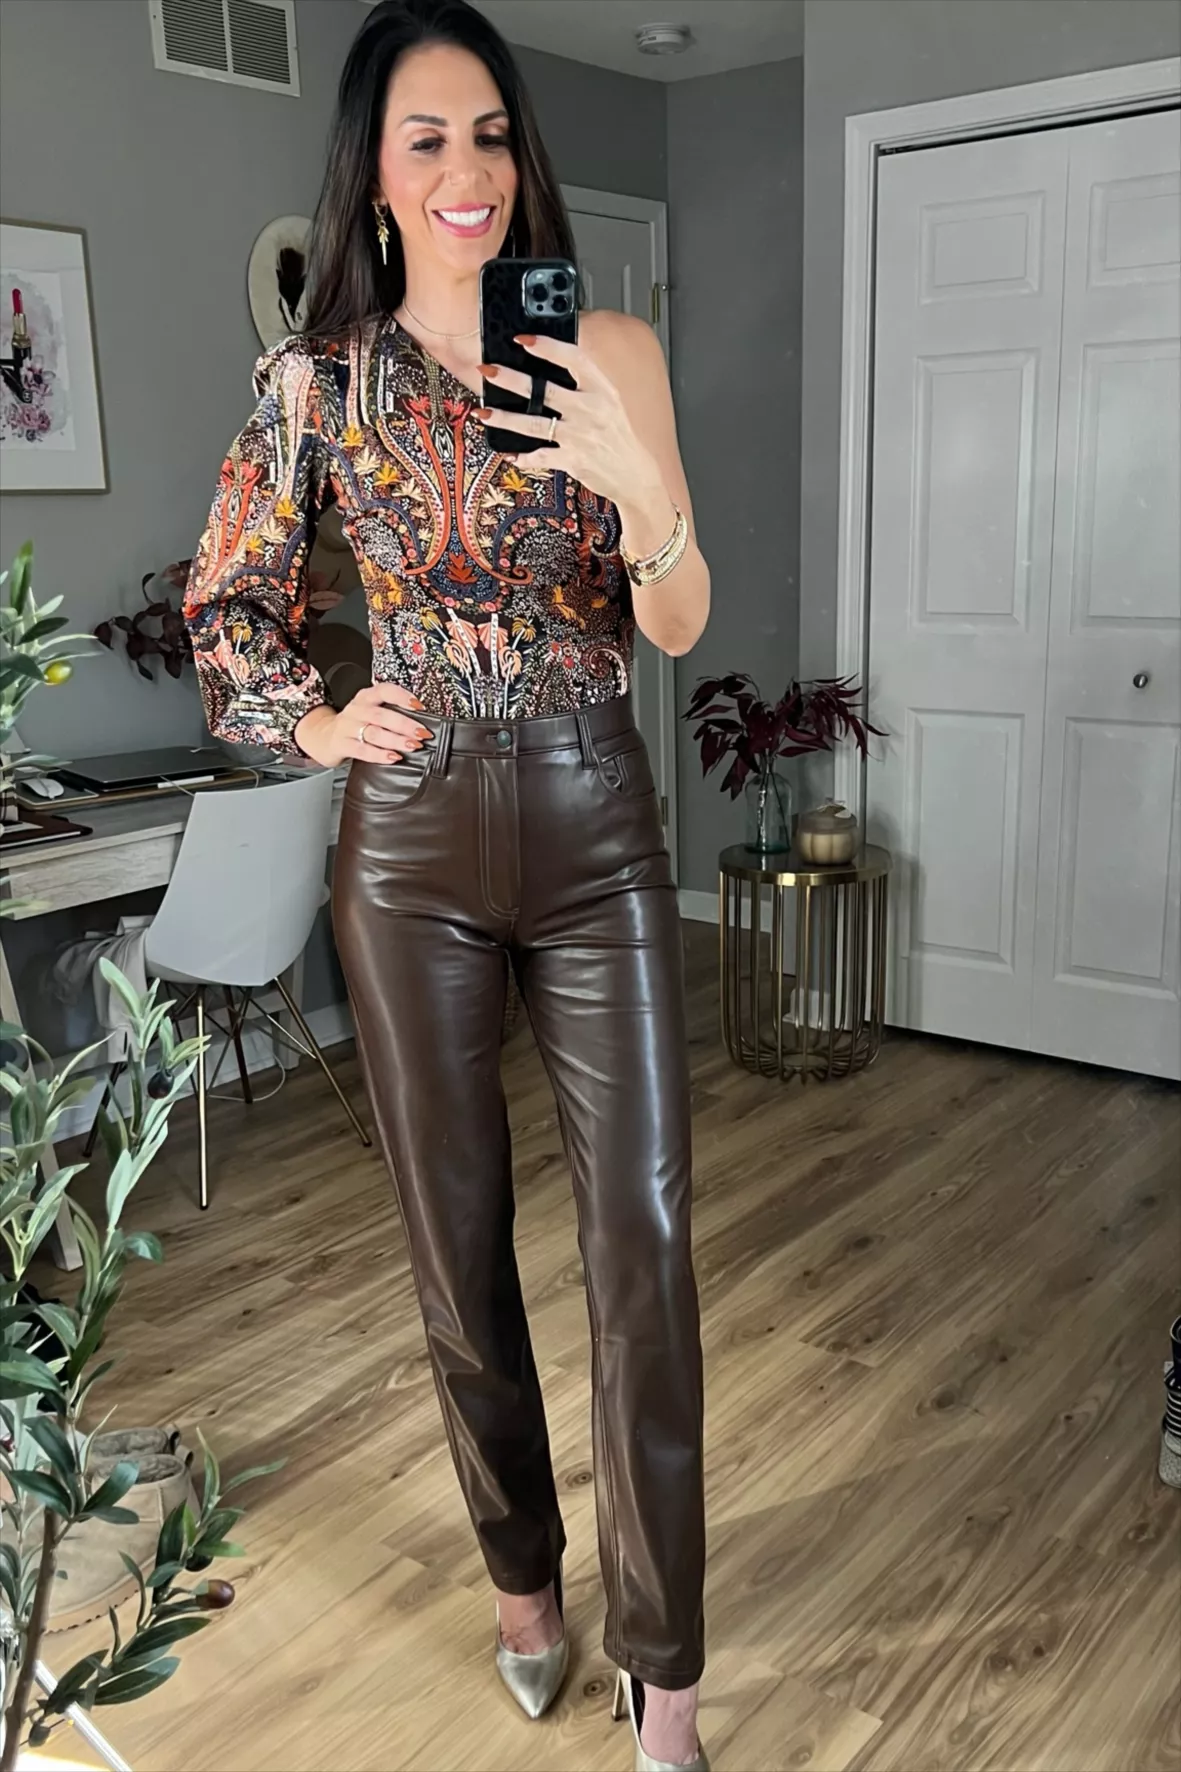 Women's Curve Love Vegan Leather 90s Straight Pant